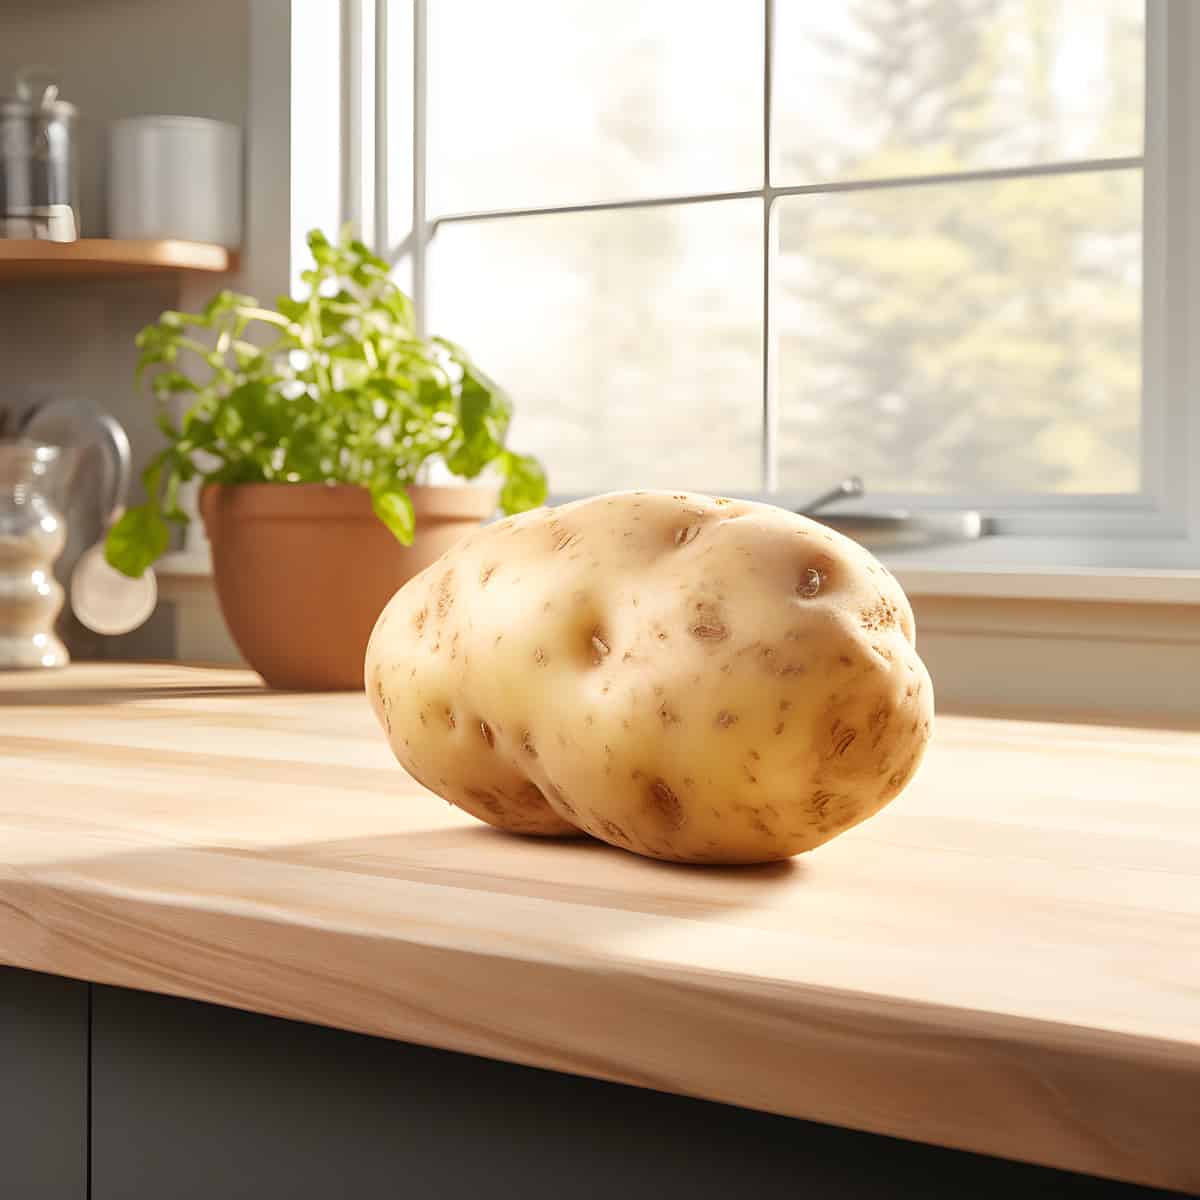 Tyson Potatoes on a kitchen counter